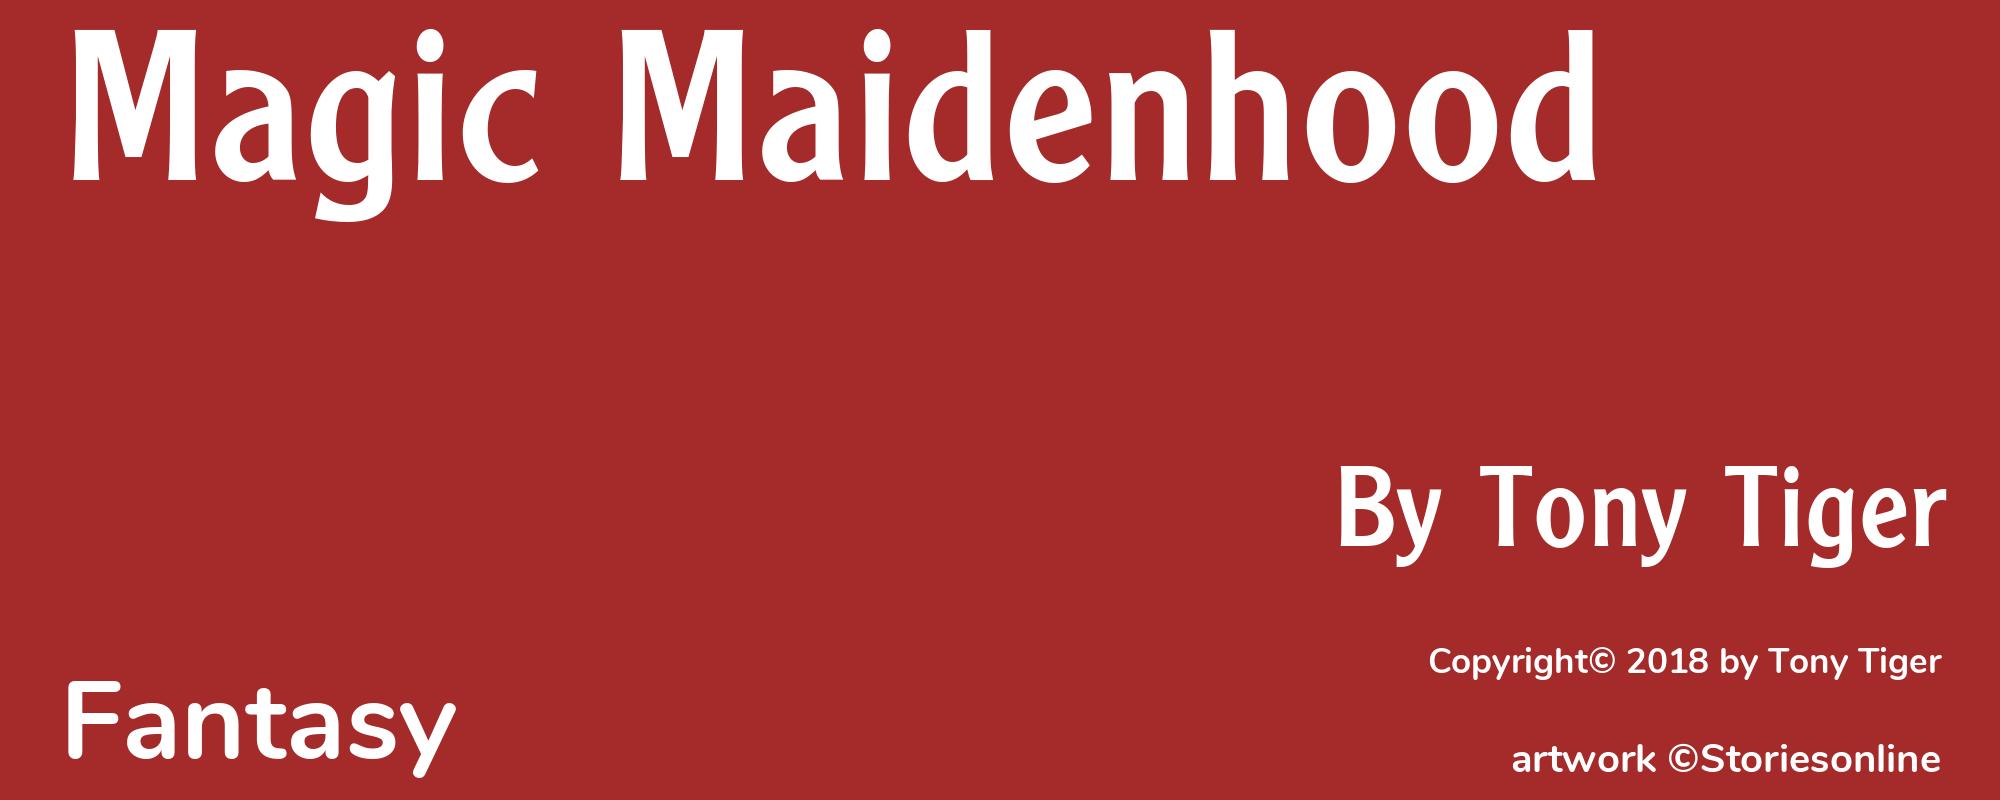 Magic Maidenhood - Cover